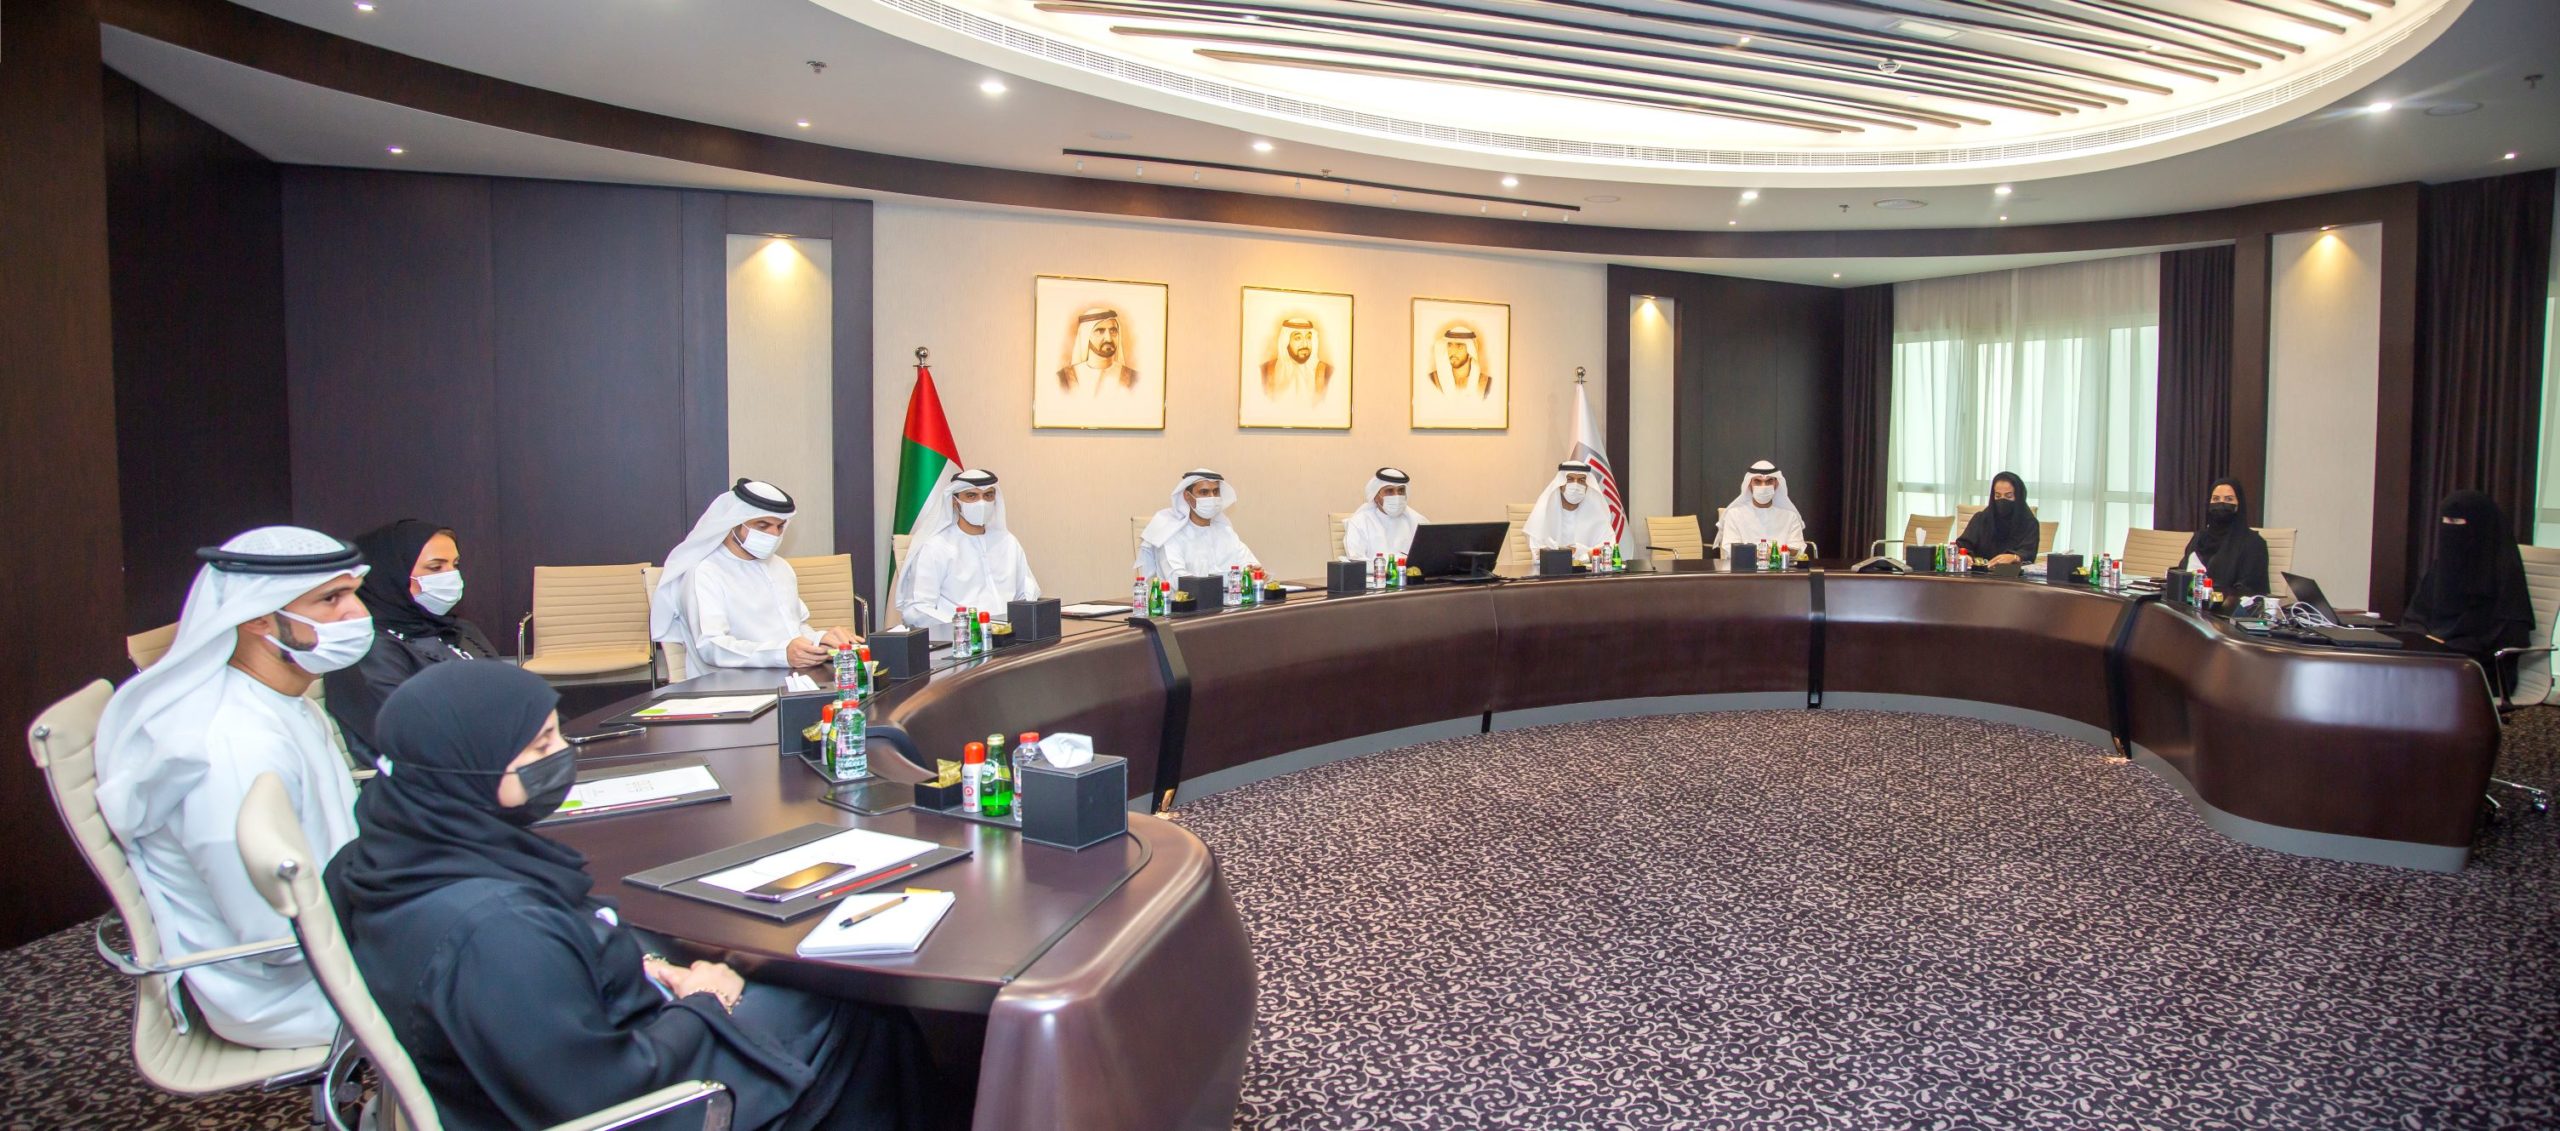 Image for Dubai Digital’s First Meeting Discusses Plans For Dubai’s Digital Transformation